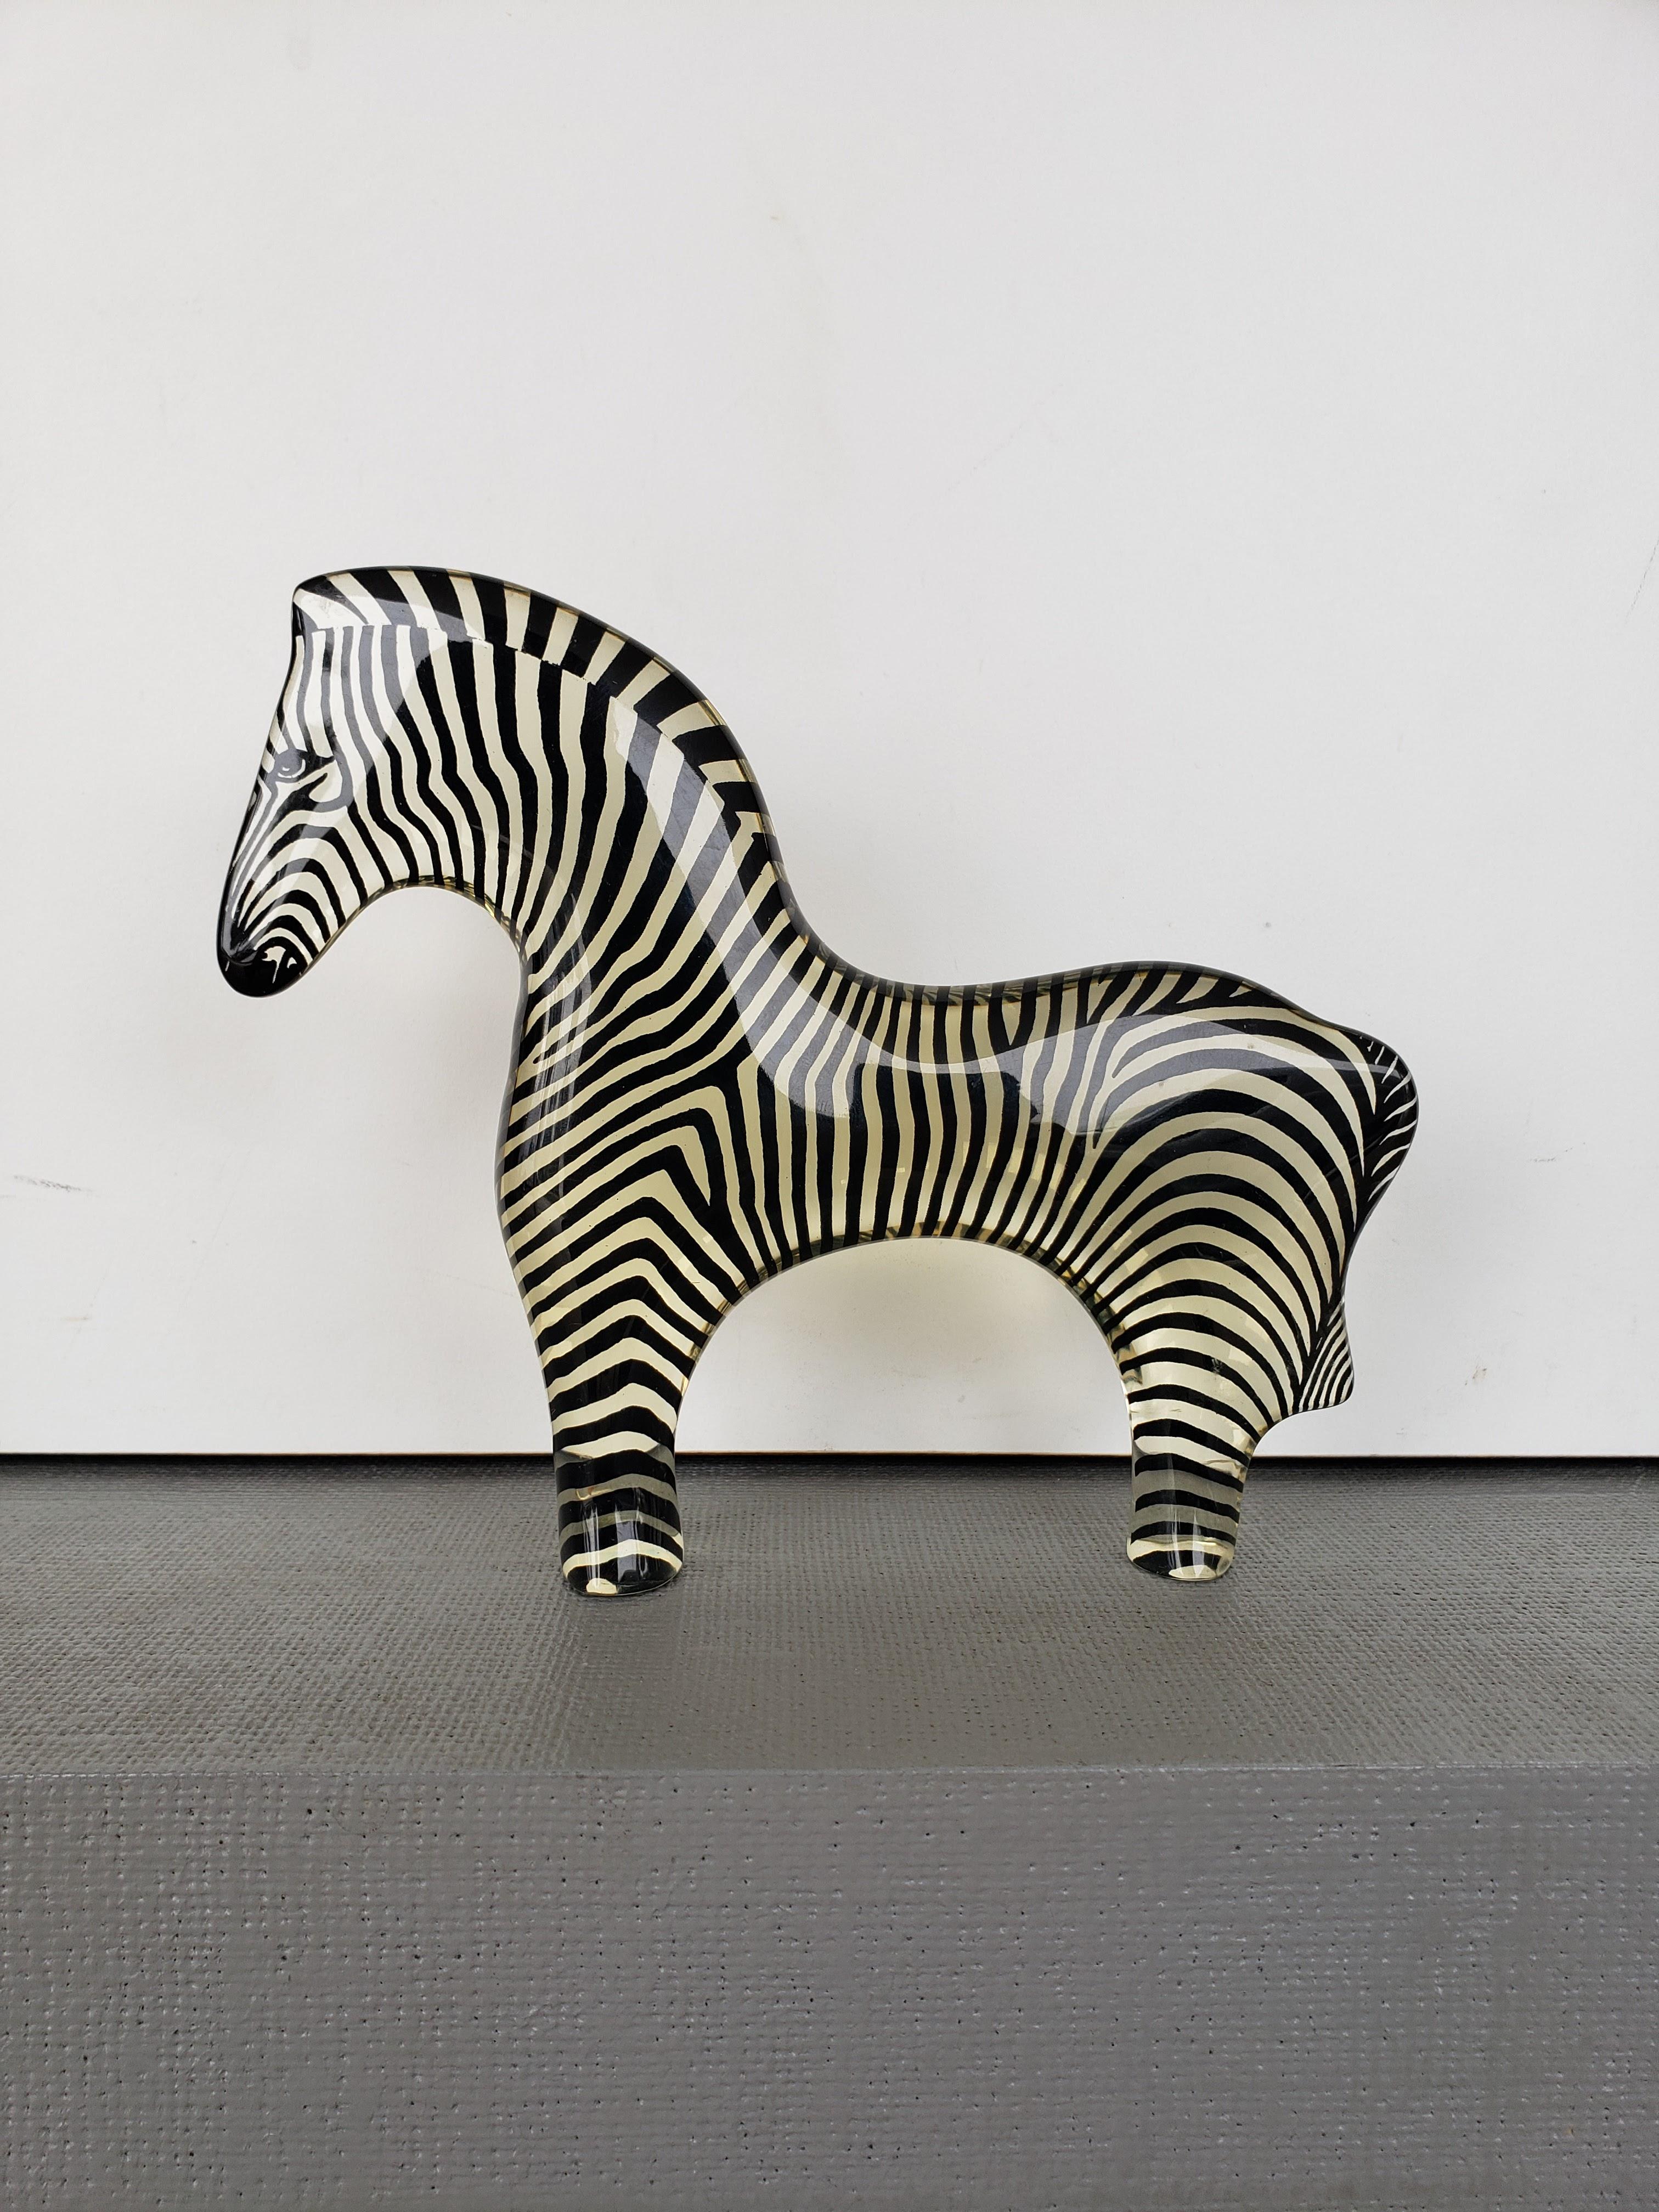 Other Mid 20th century Abraham Palatnik Brazil Lucite Zebra Op Art Animal Sculpture  For Sale